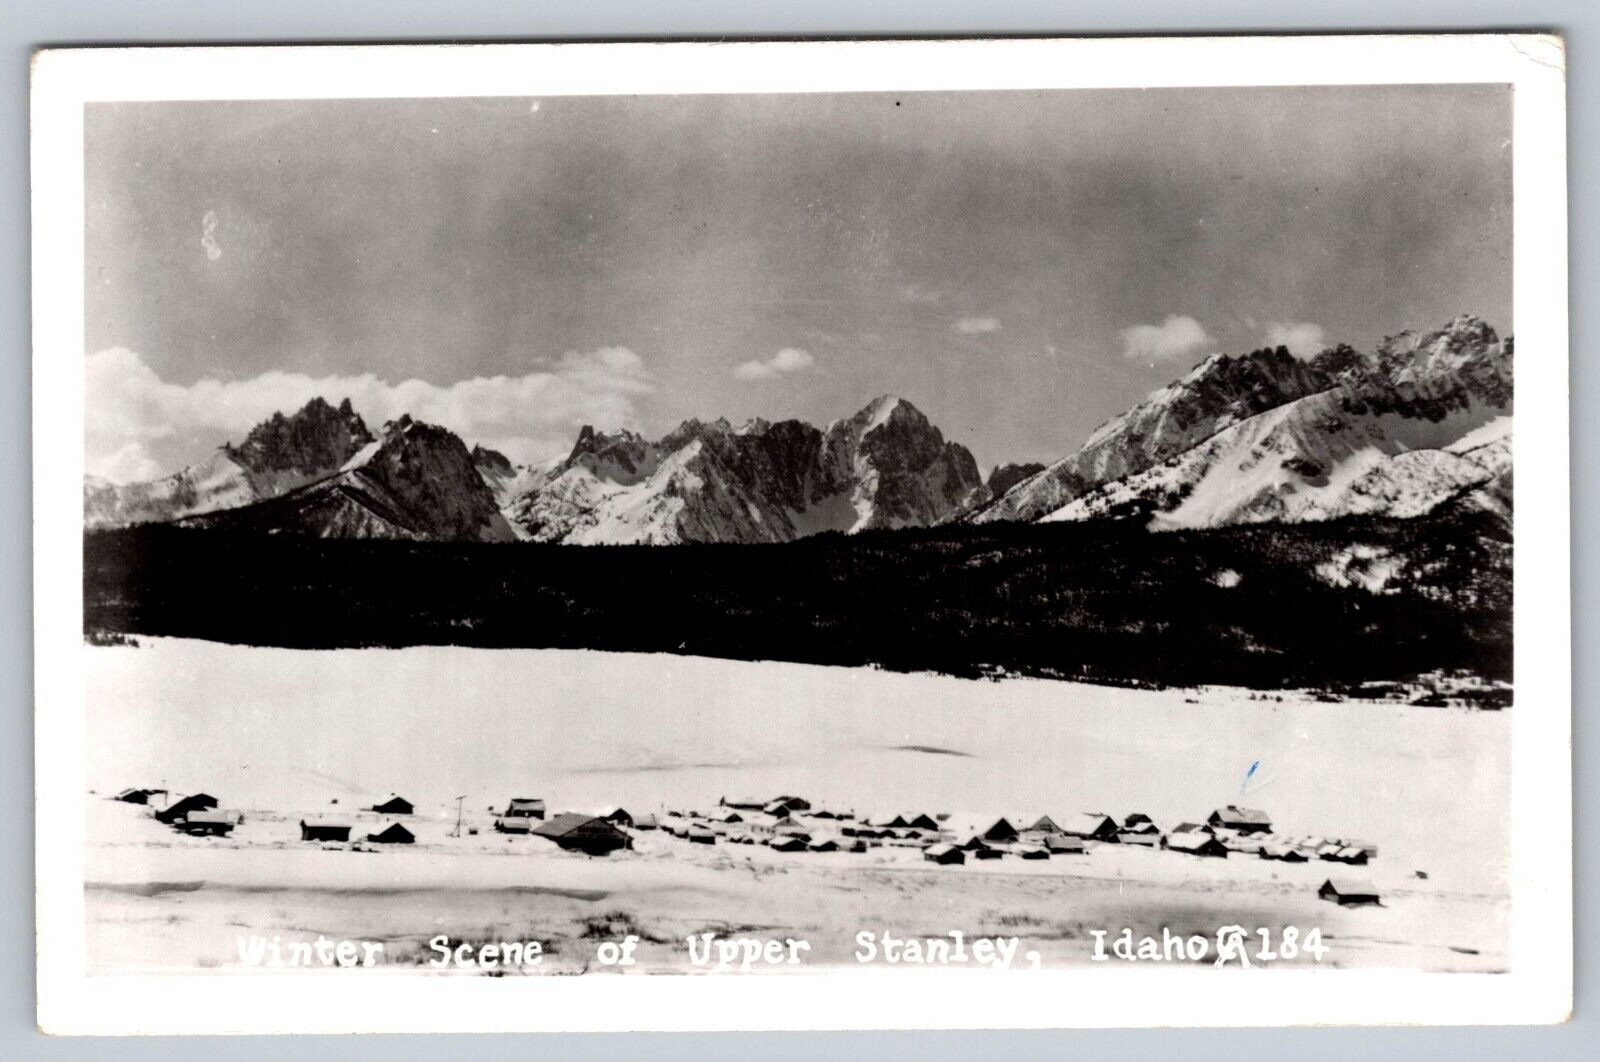 Stanley Idaho - Real Photo Postcard Winter Scene Early Town View - RPPC Postcard